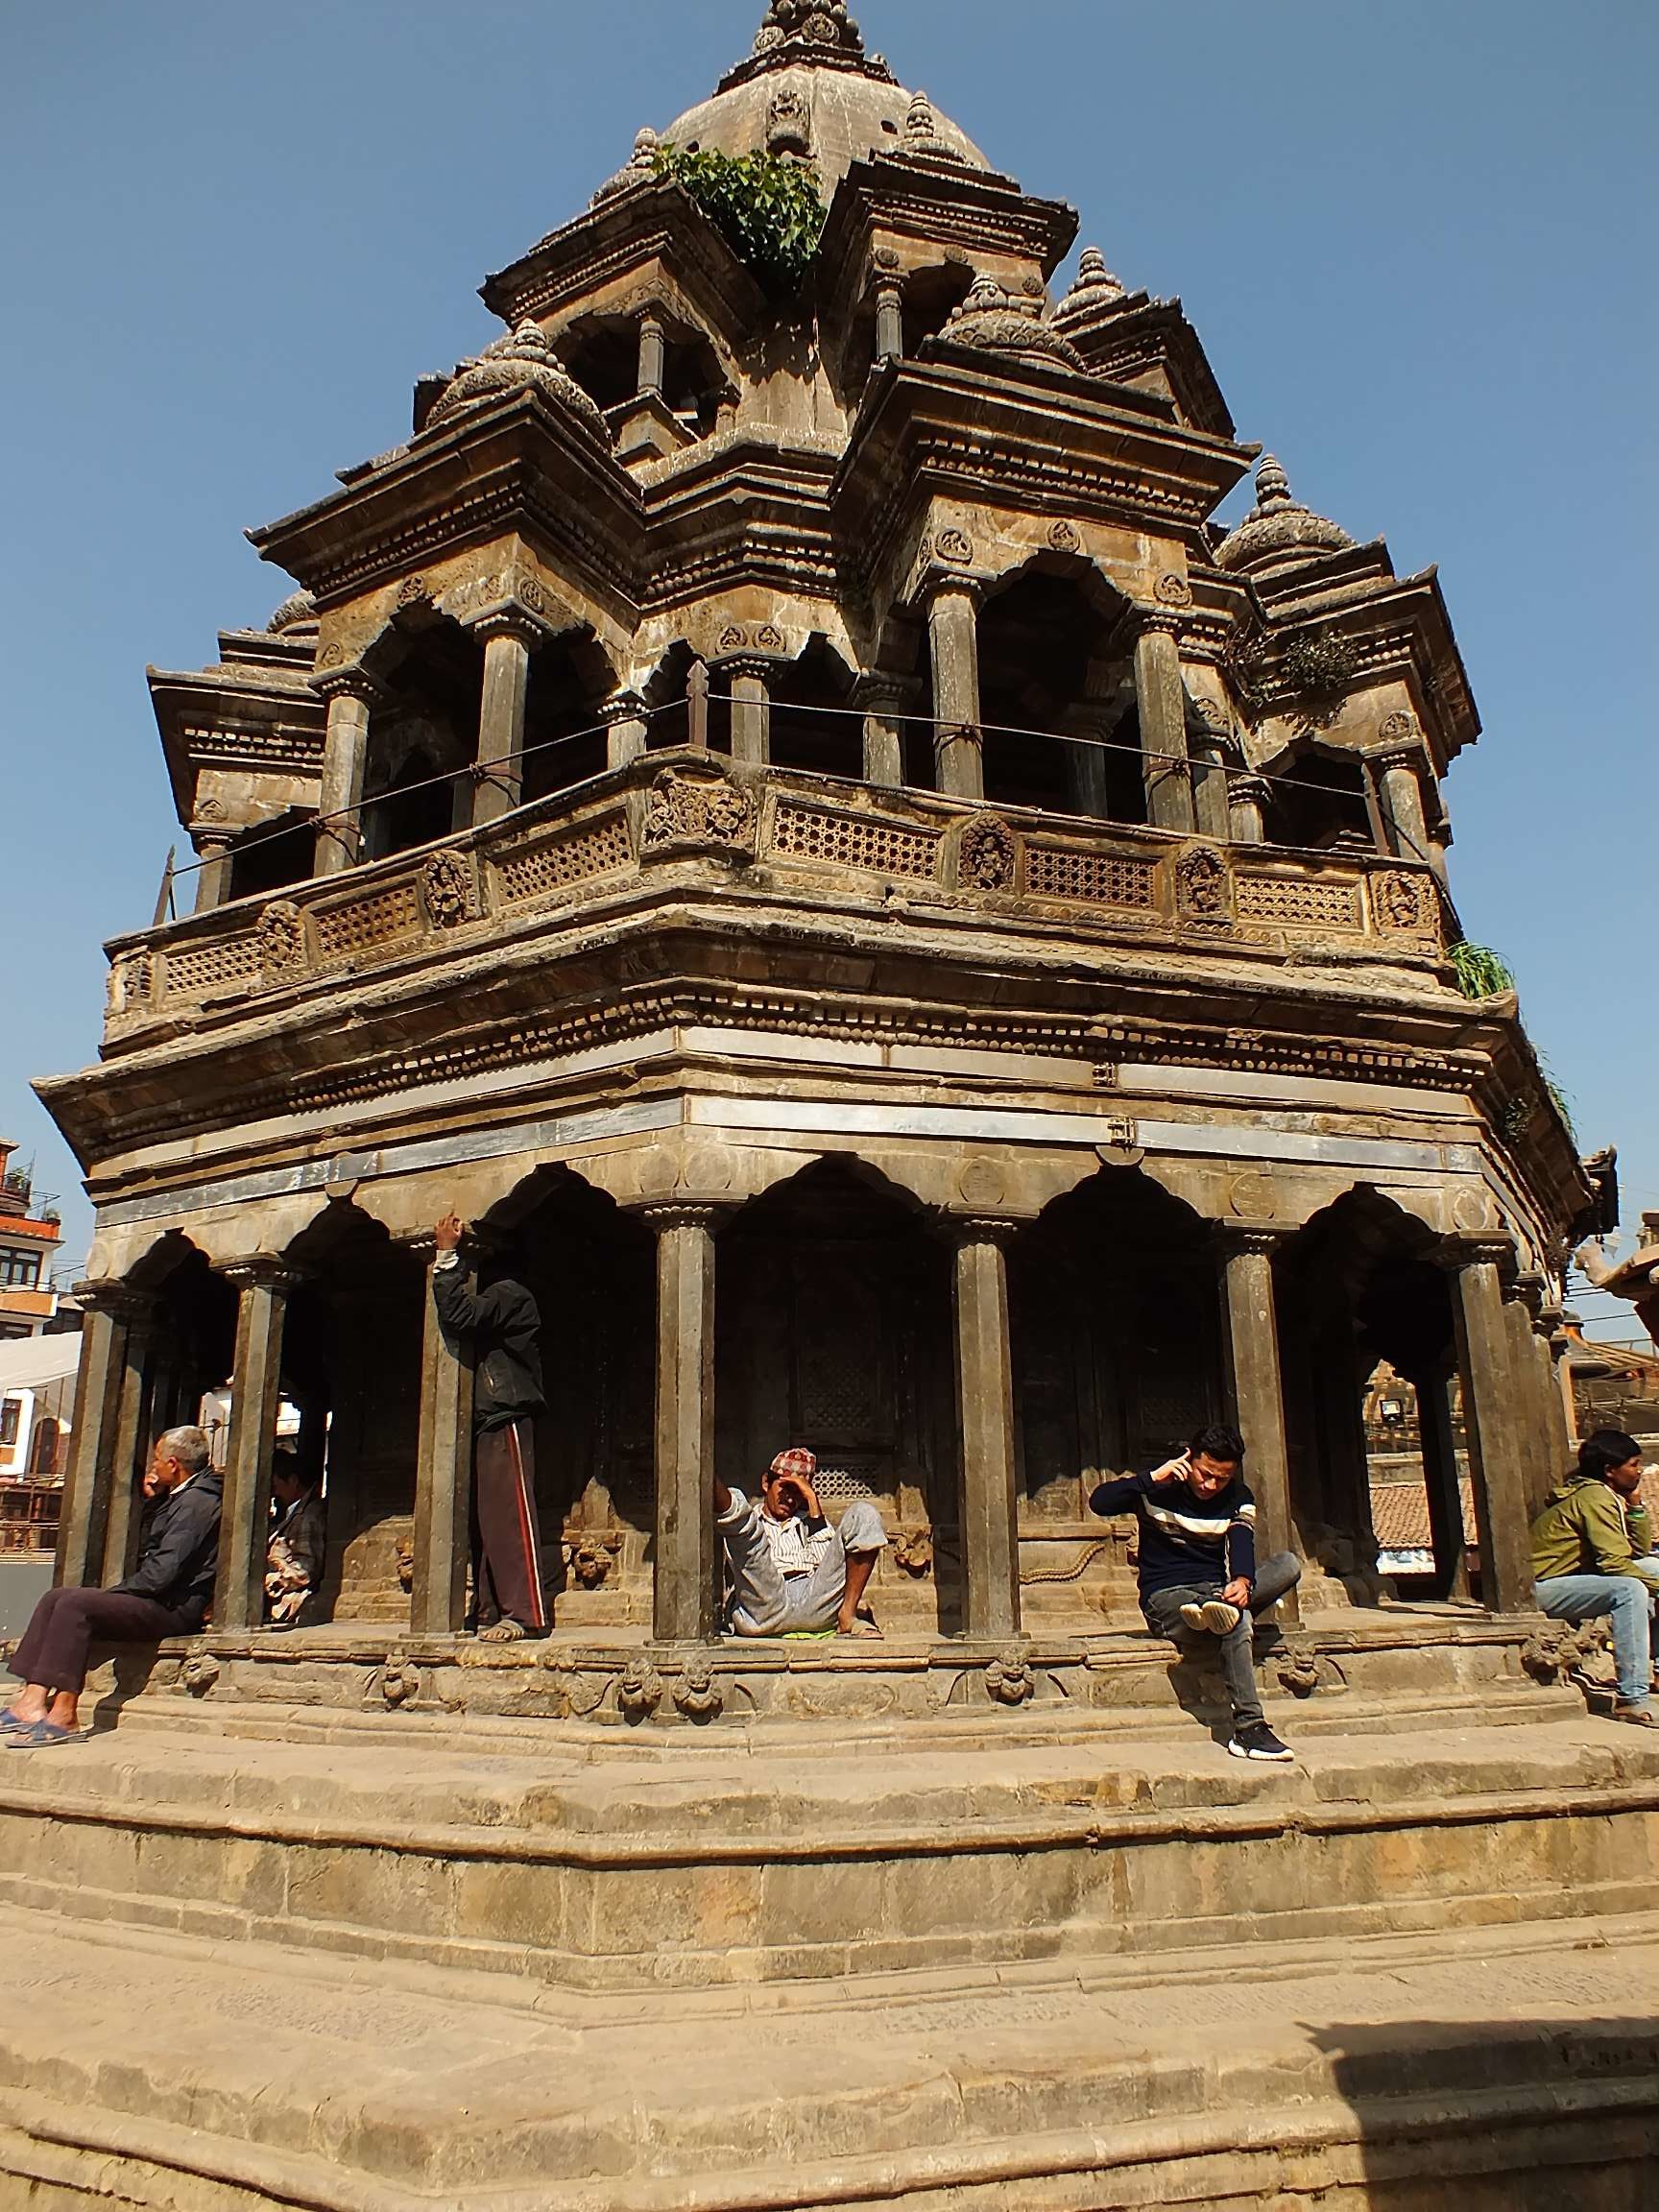 Chyasi Deval Krishna Tapınağı (च्यासी देवल कृष्ण मन्दिर)